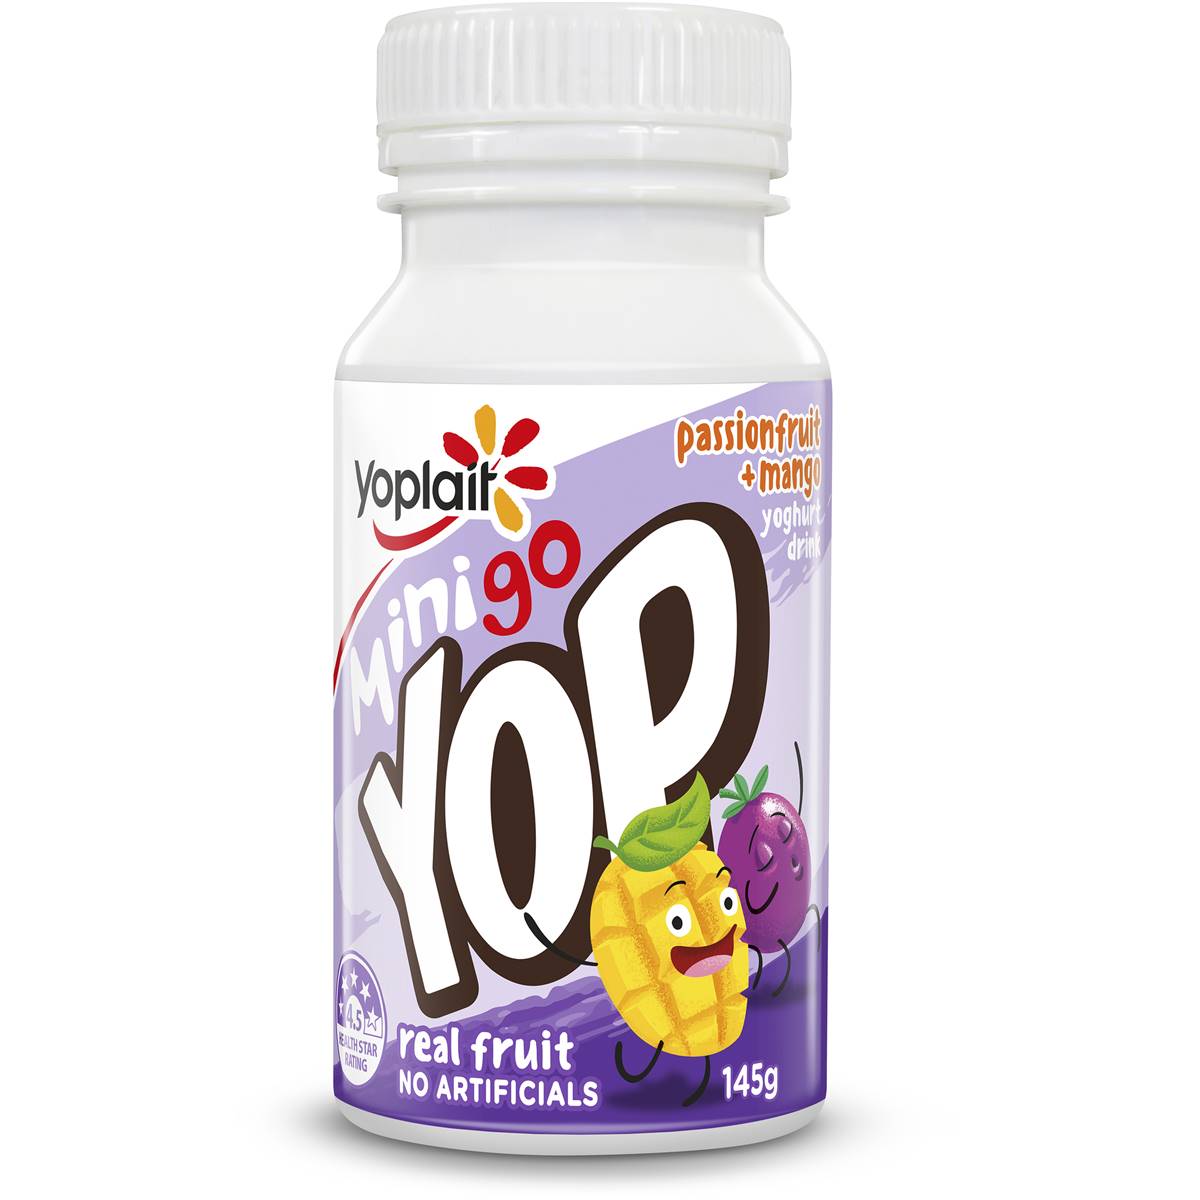 Calories in Yoplait Yop Mini Go Kids Yoghurt Drink Passionfruit & Mango